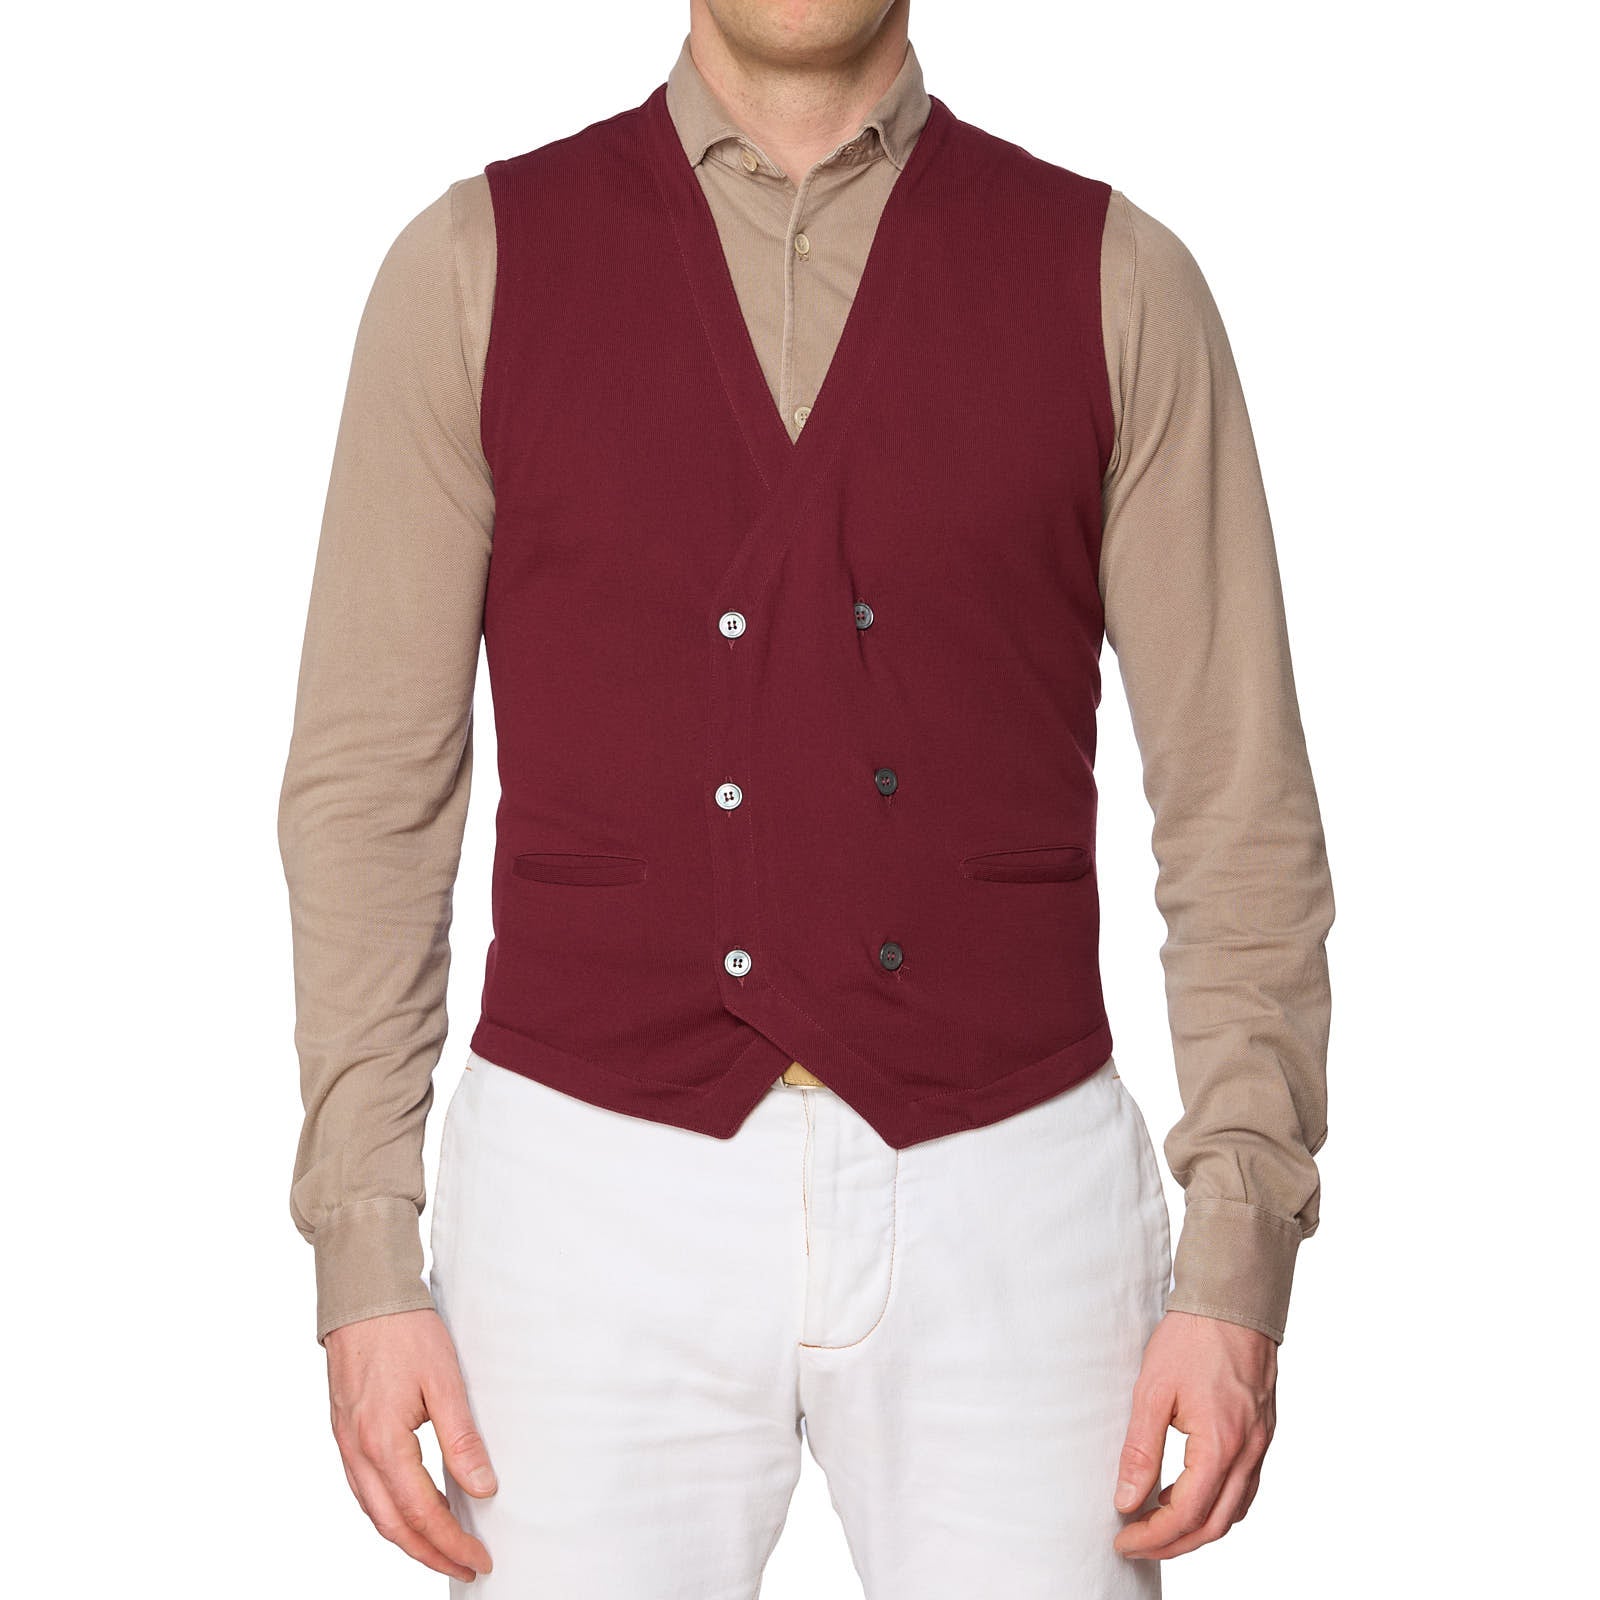 GRAN SASSO for VANNUCCI Burgundy Cotton Knit DB Vest Waistcoat EU 50 NEW US M